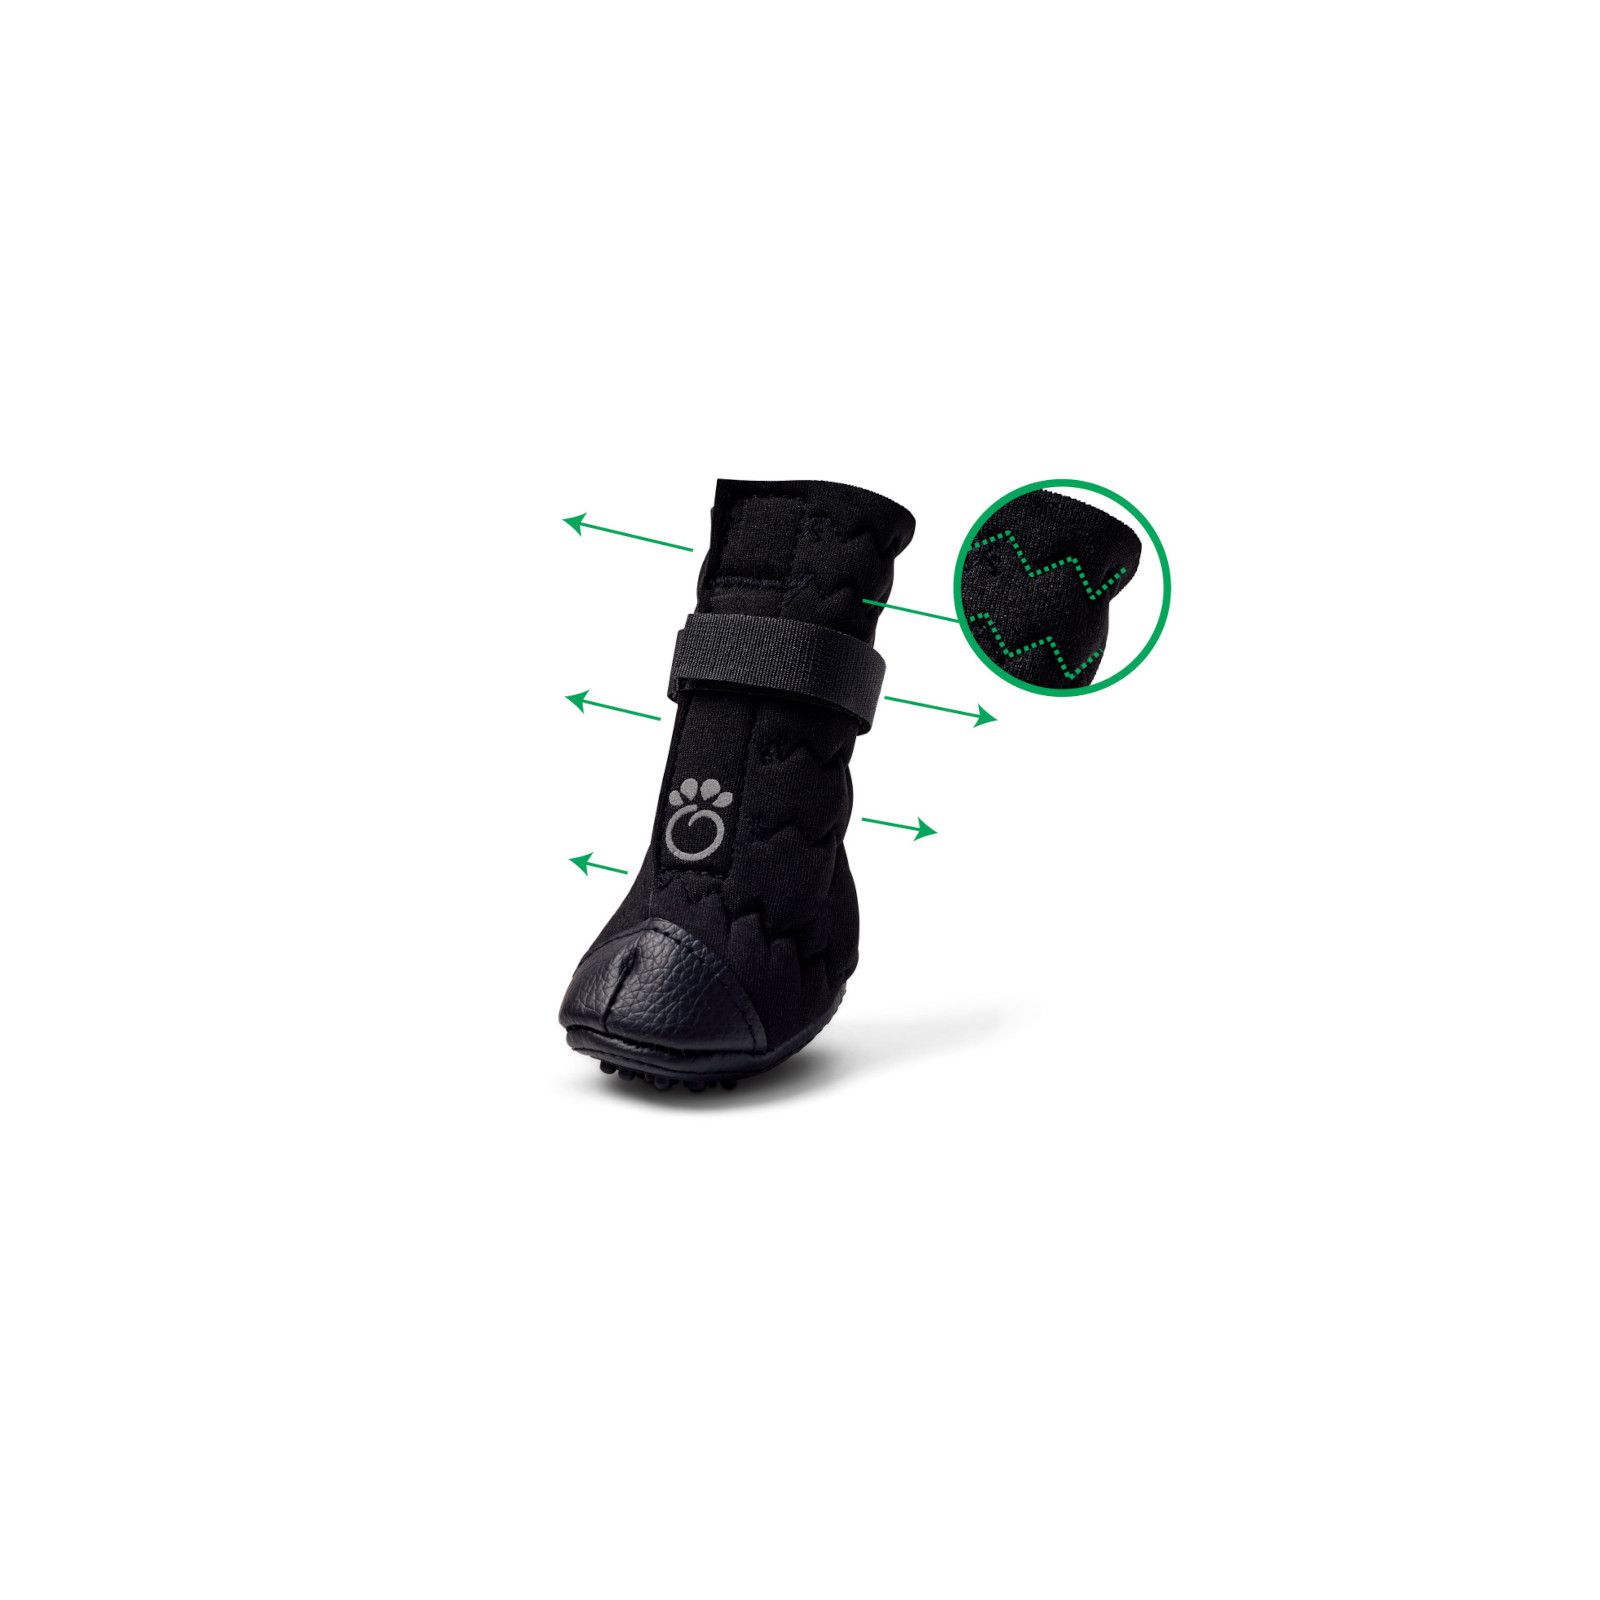 GF Pet Elastofit Boots - Pfotenschutz-Schuhe für Hunde